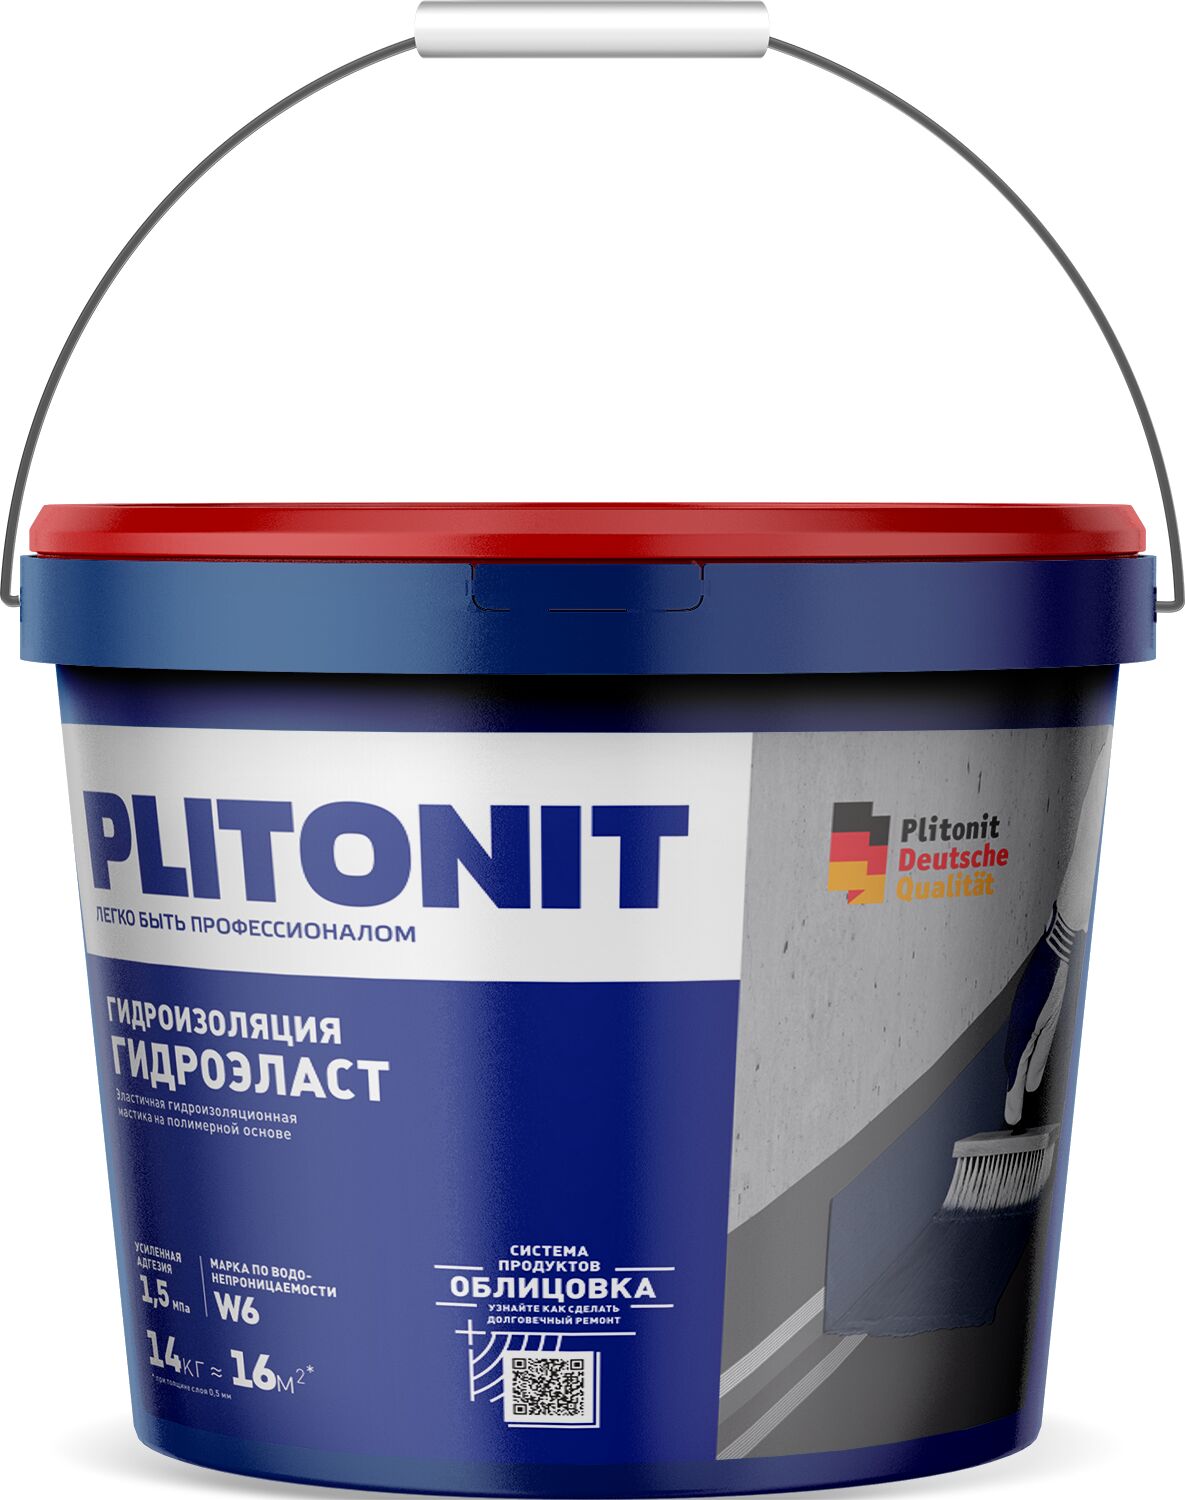 PLITONIT ГидроЭласт -14 эластичная гидроизоляционная мастика